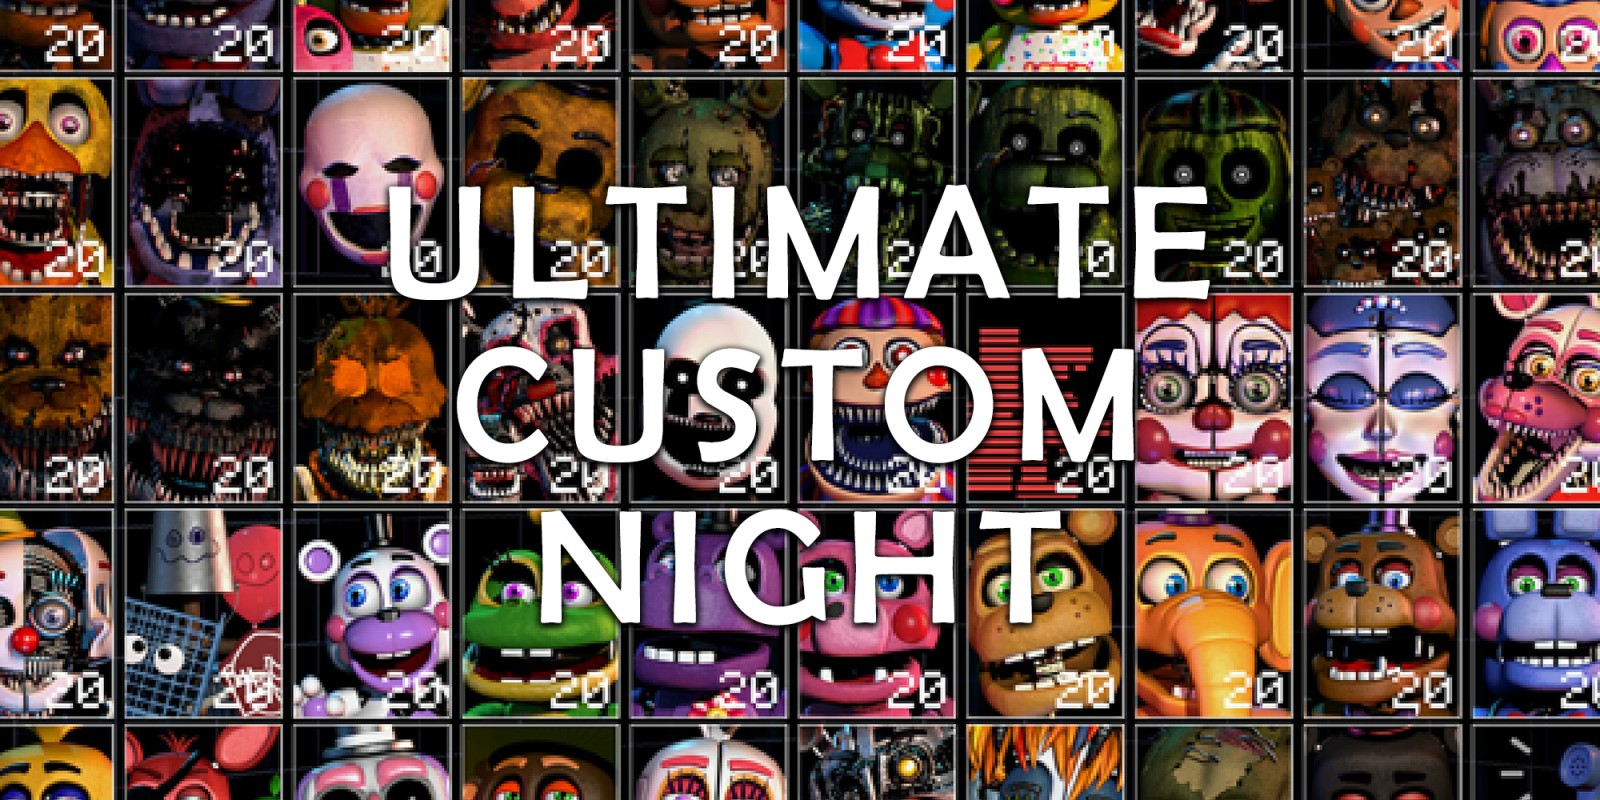 ultimate custom night free download free